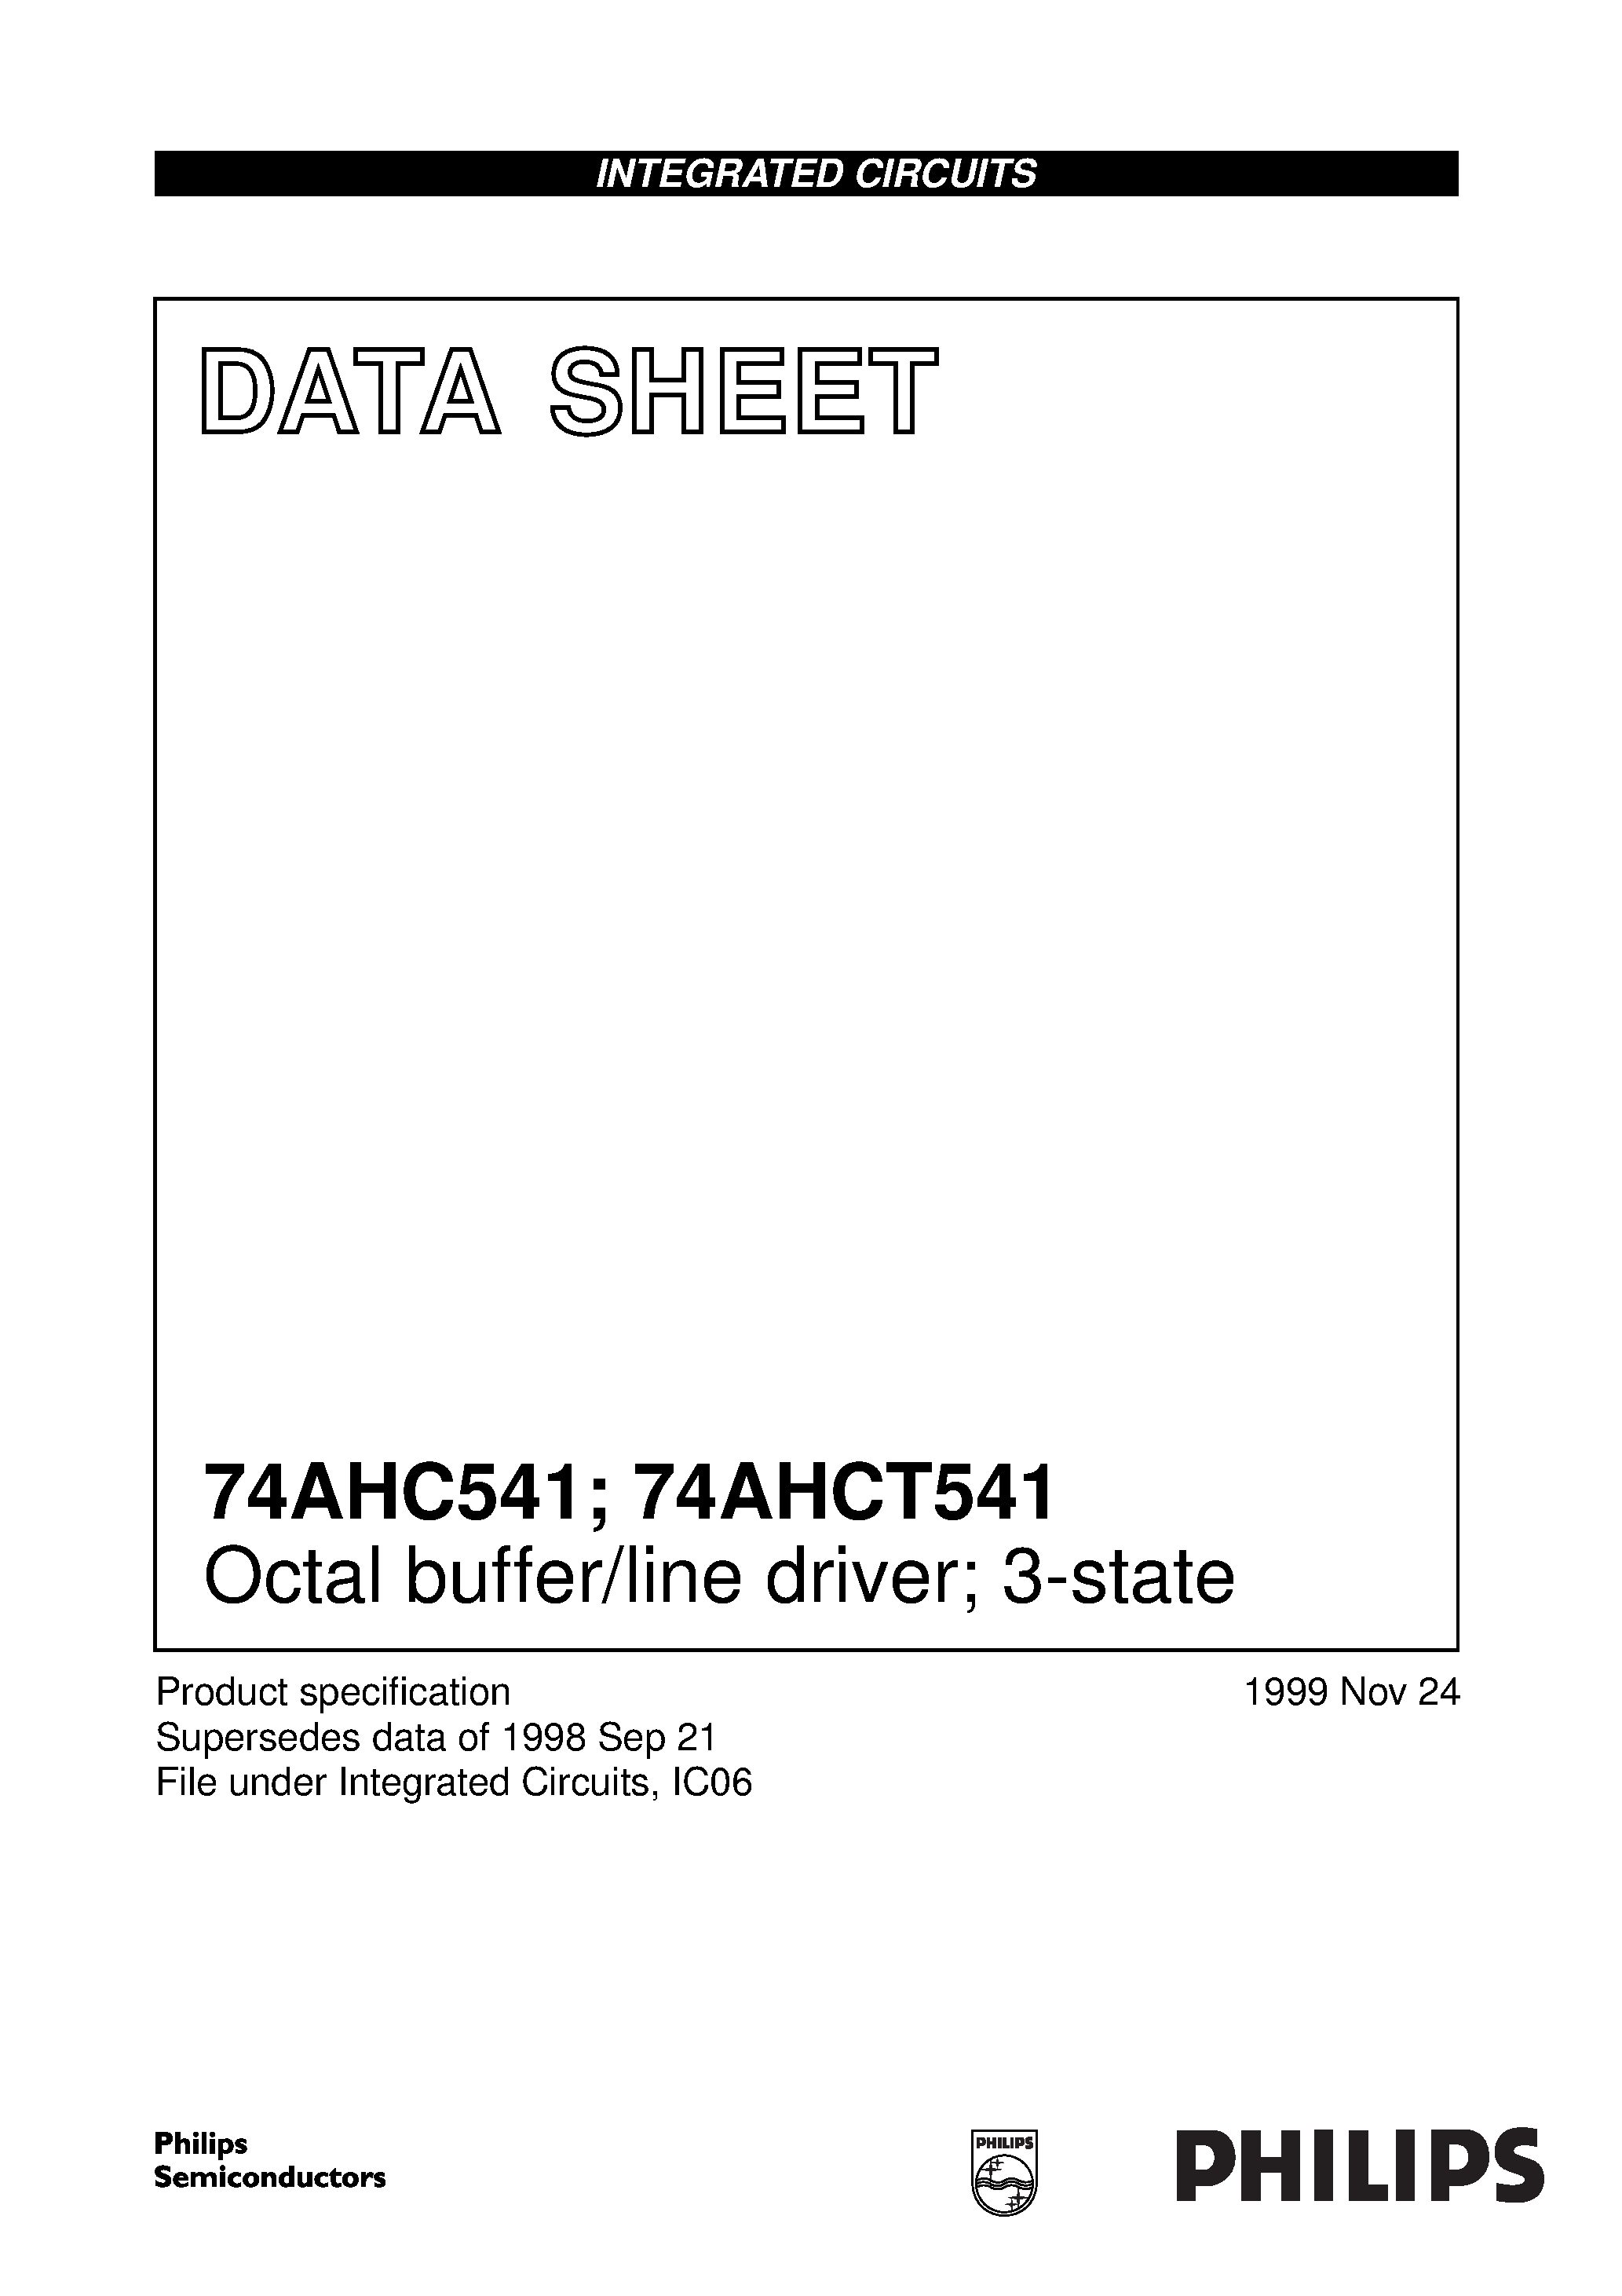 Даташит 74AHCT541D - Octal buffer/line driver; 3-state страница 1